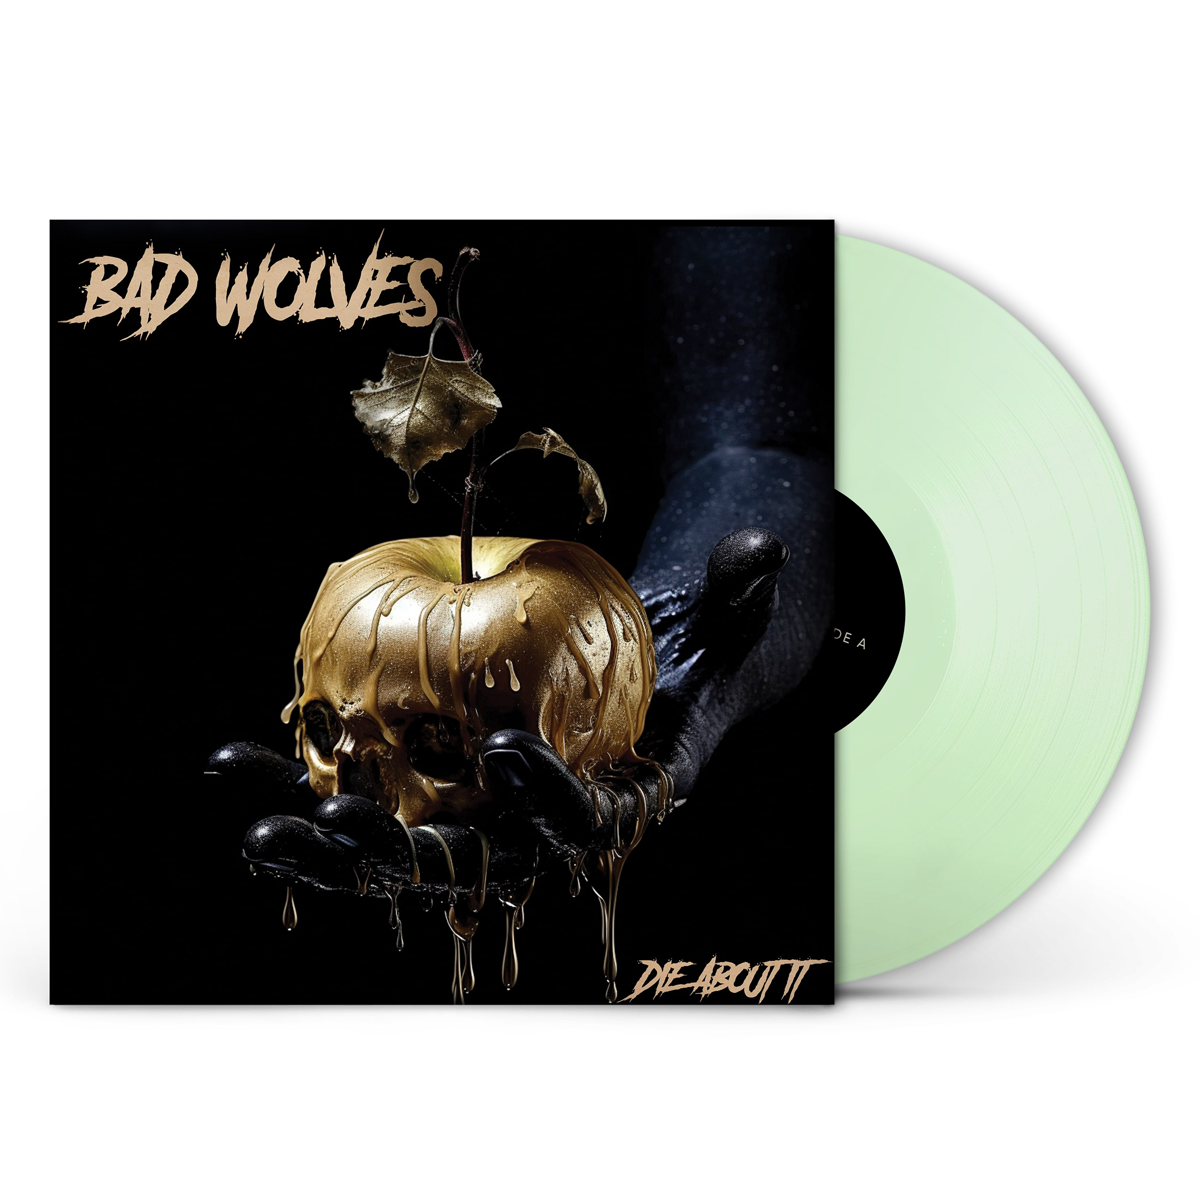 Bad Wolves - Die about it - LP - multicolor - EMP Exklusiv!